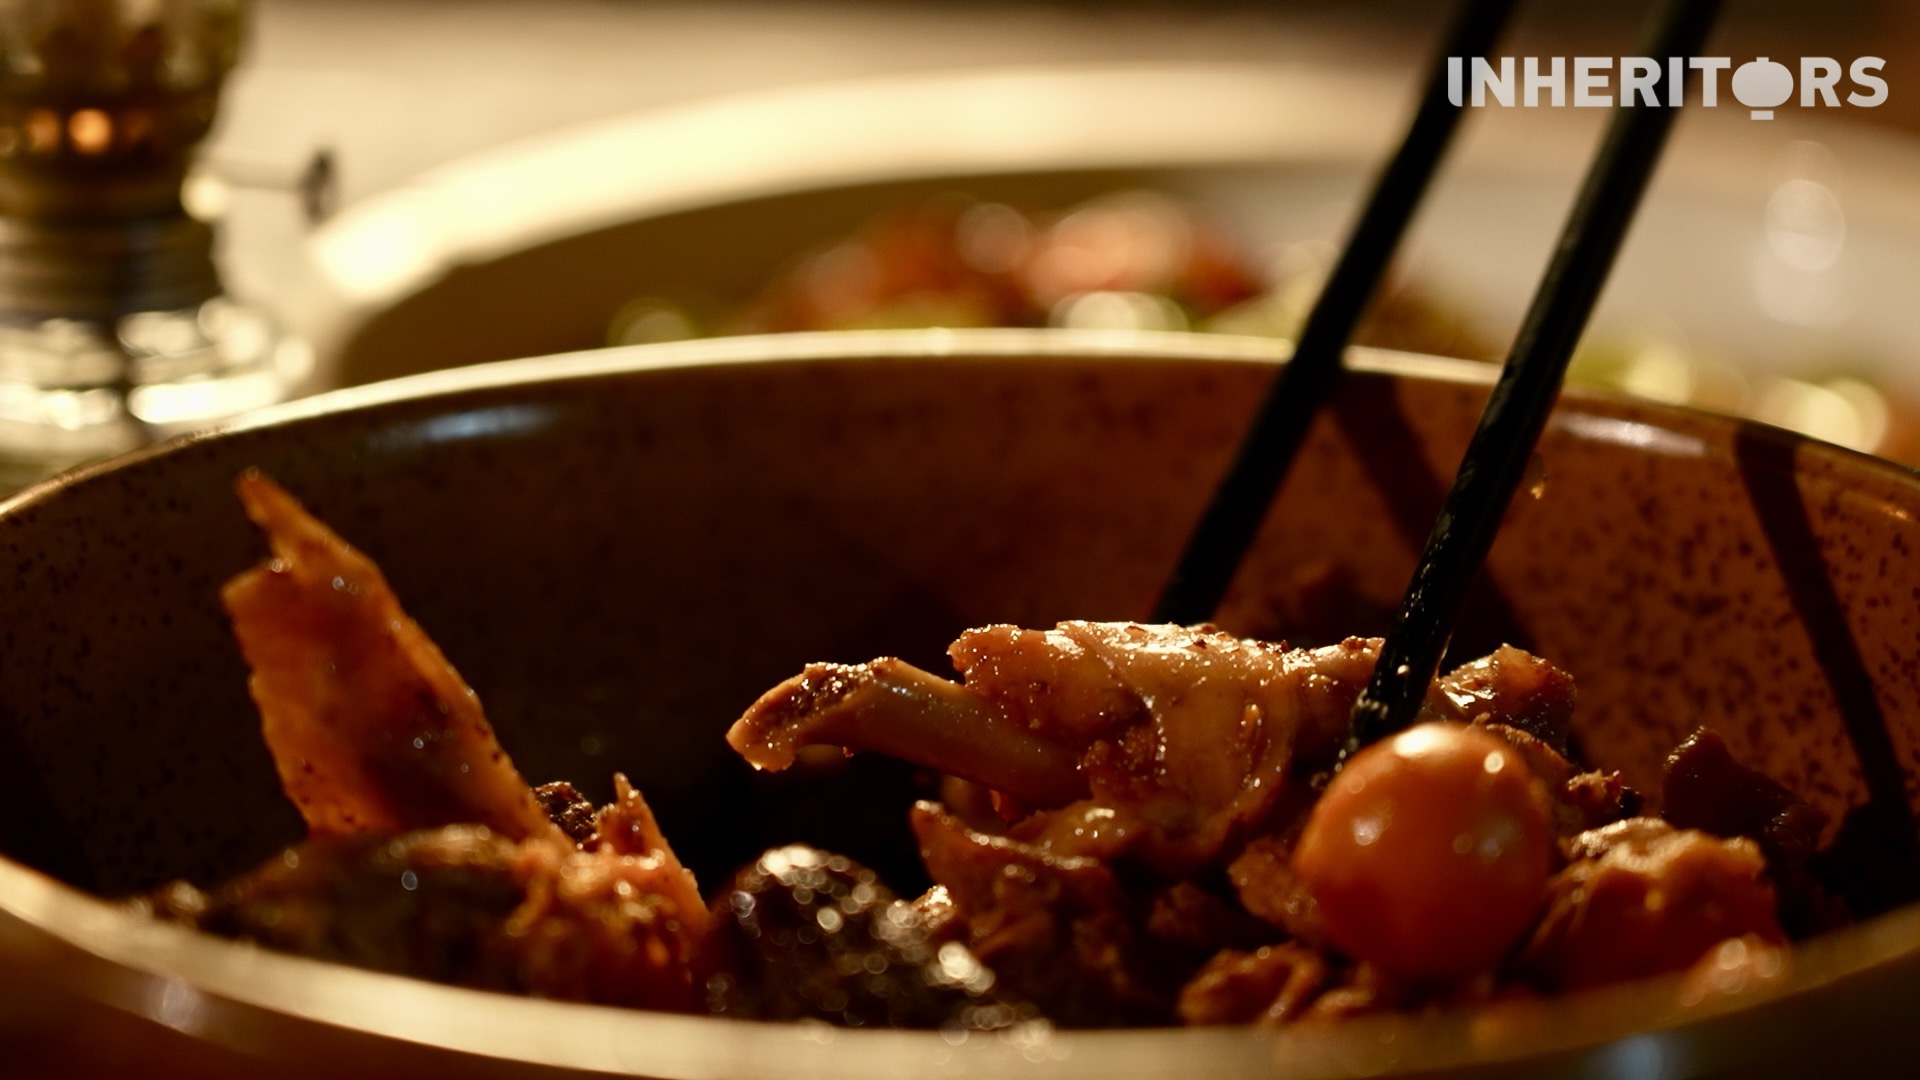 Hakka cuisine embodies the rich heritage and lifestyle of the Hakka people. /CGTN